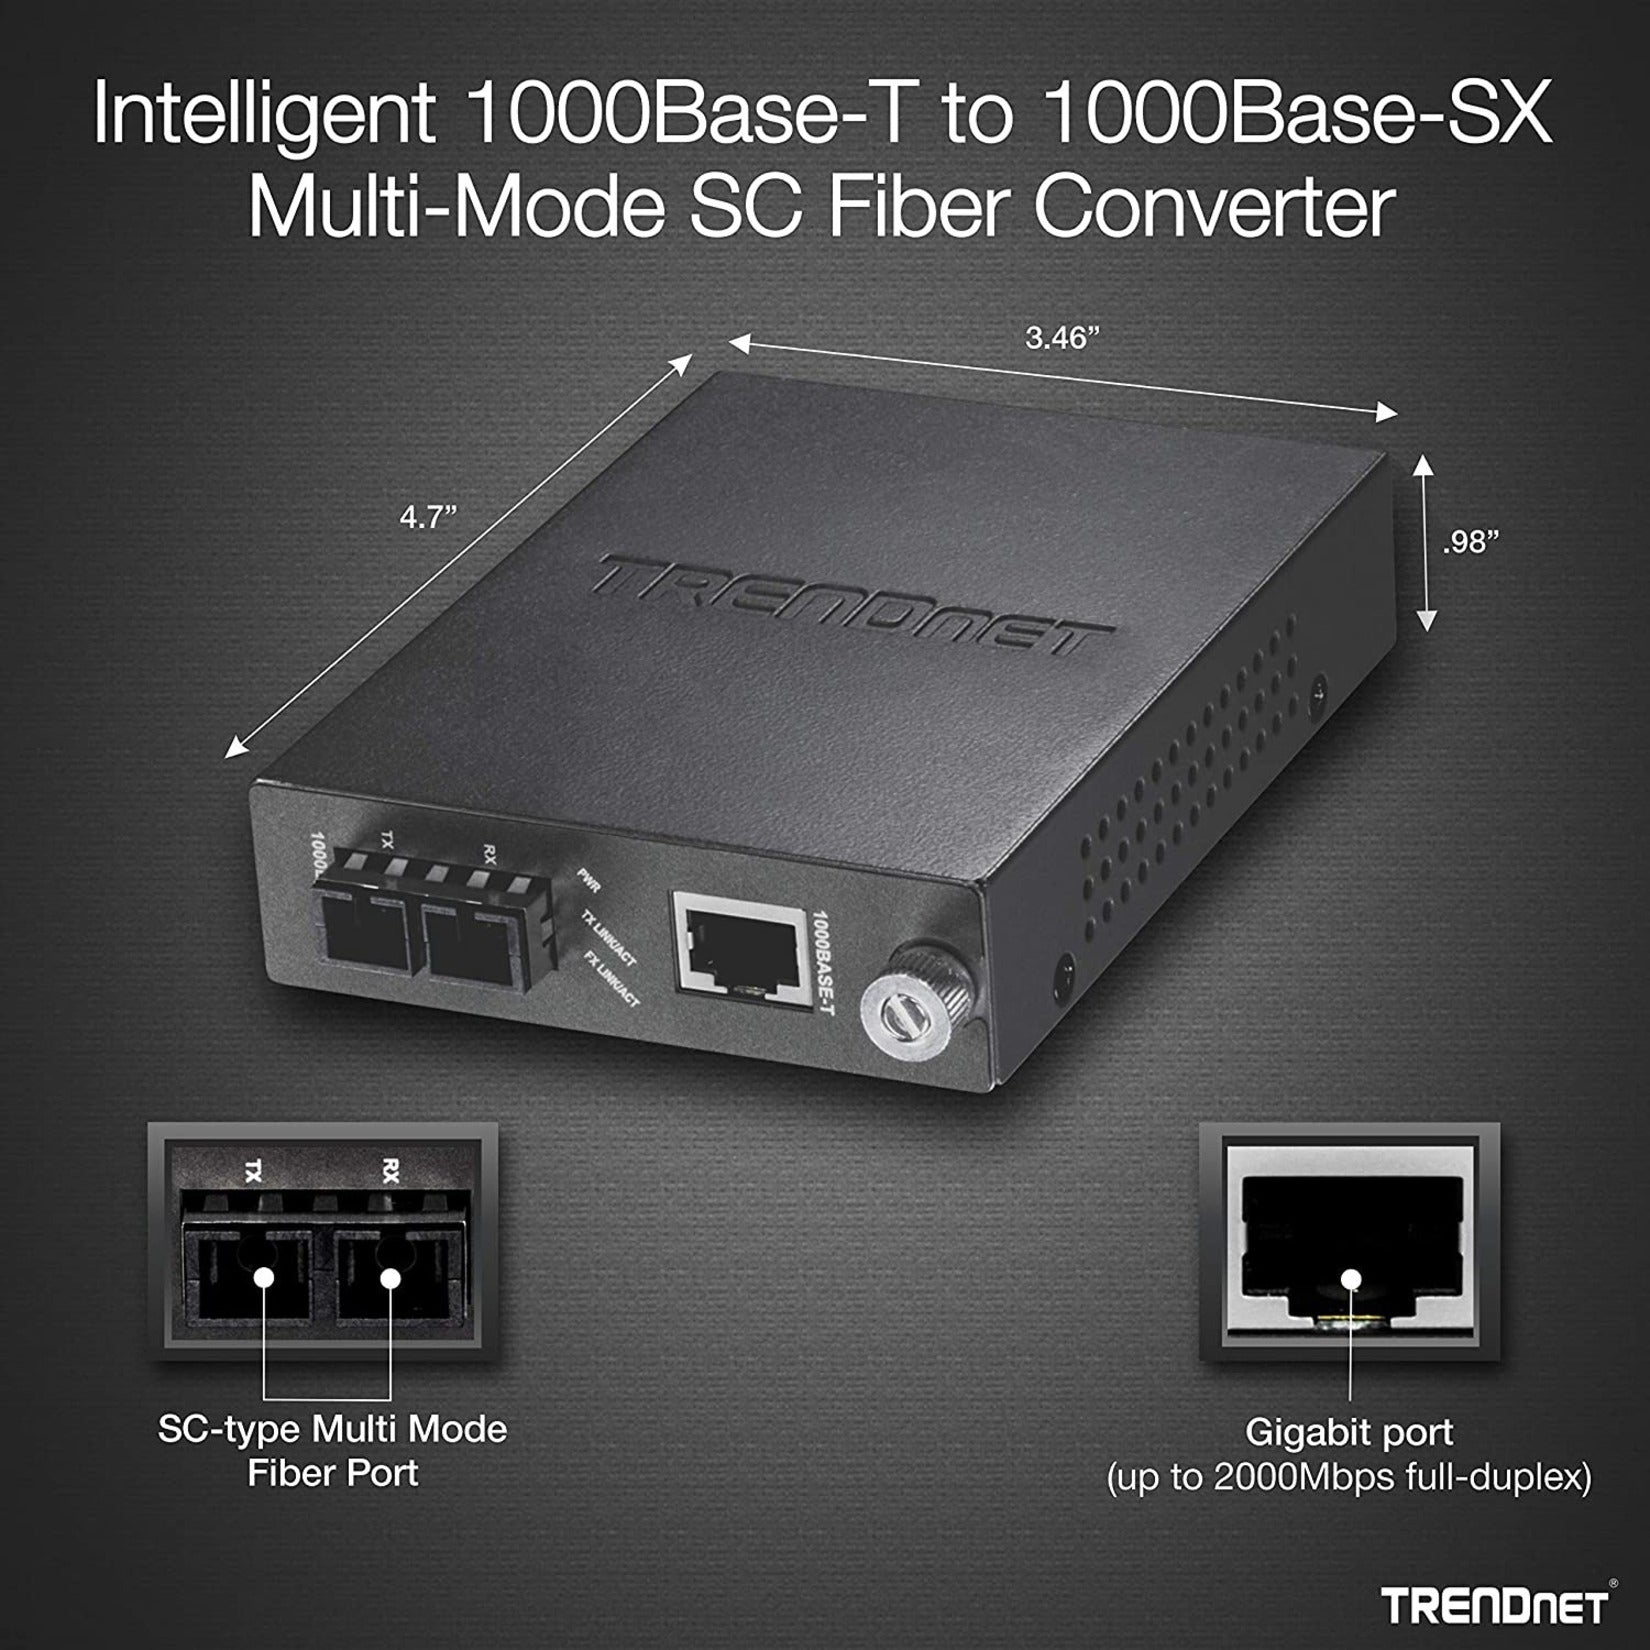 TRENDnet TFC-1000MSC 1000Base-T to 1000Base-SX SC-type Fiber Converter, Multi-Mode Fiber with SC Connector